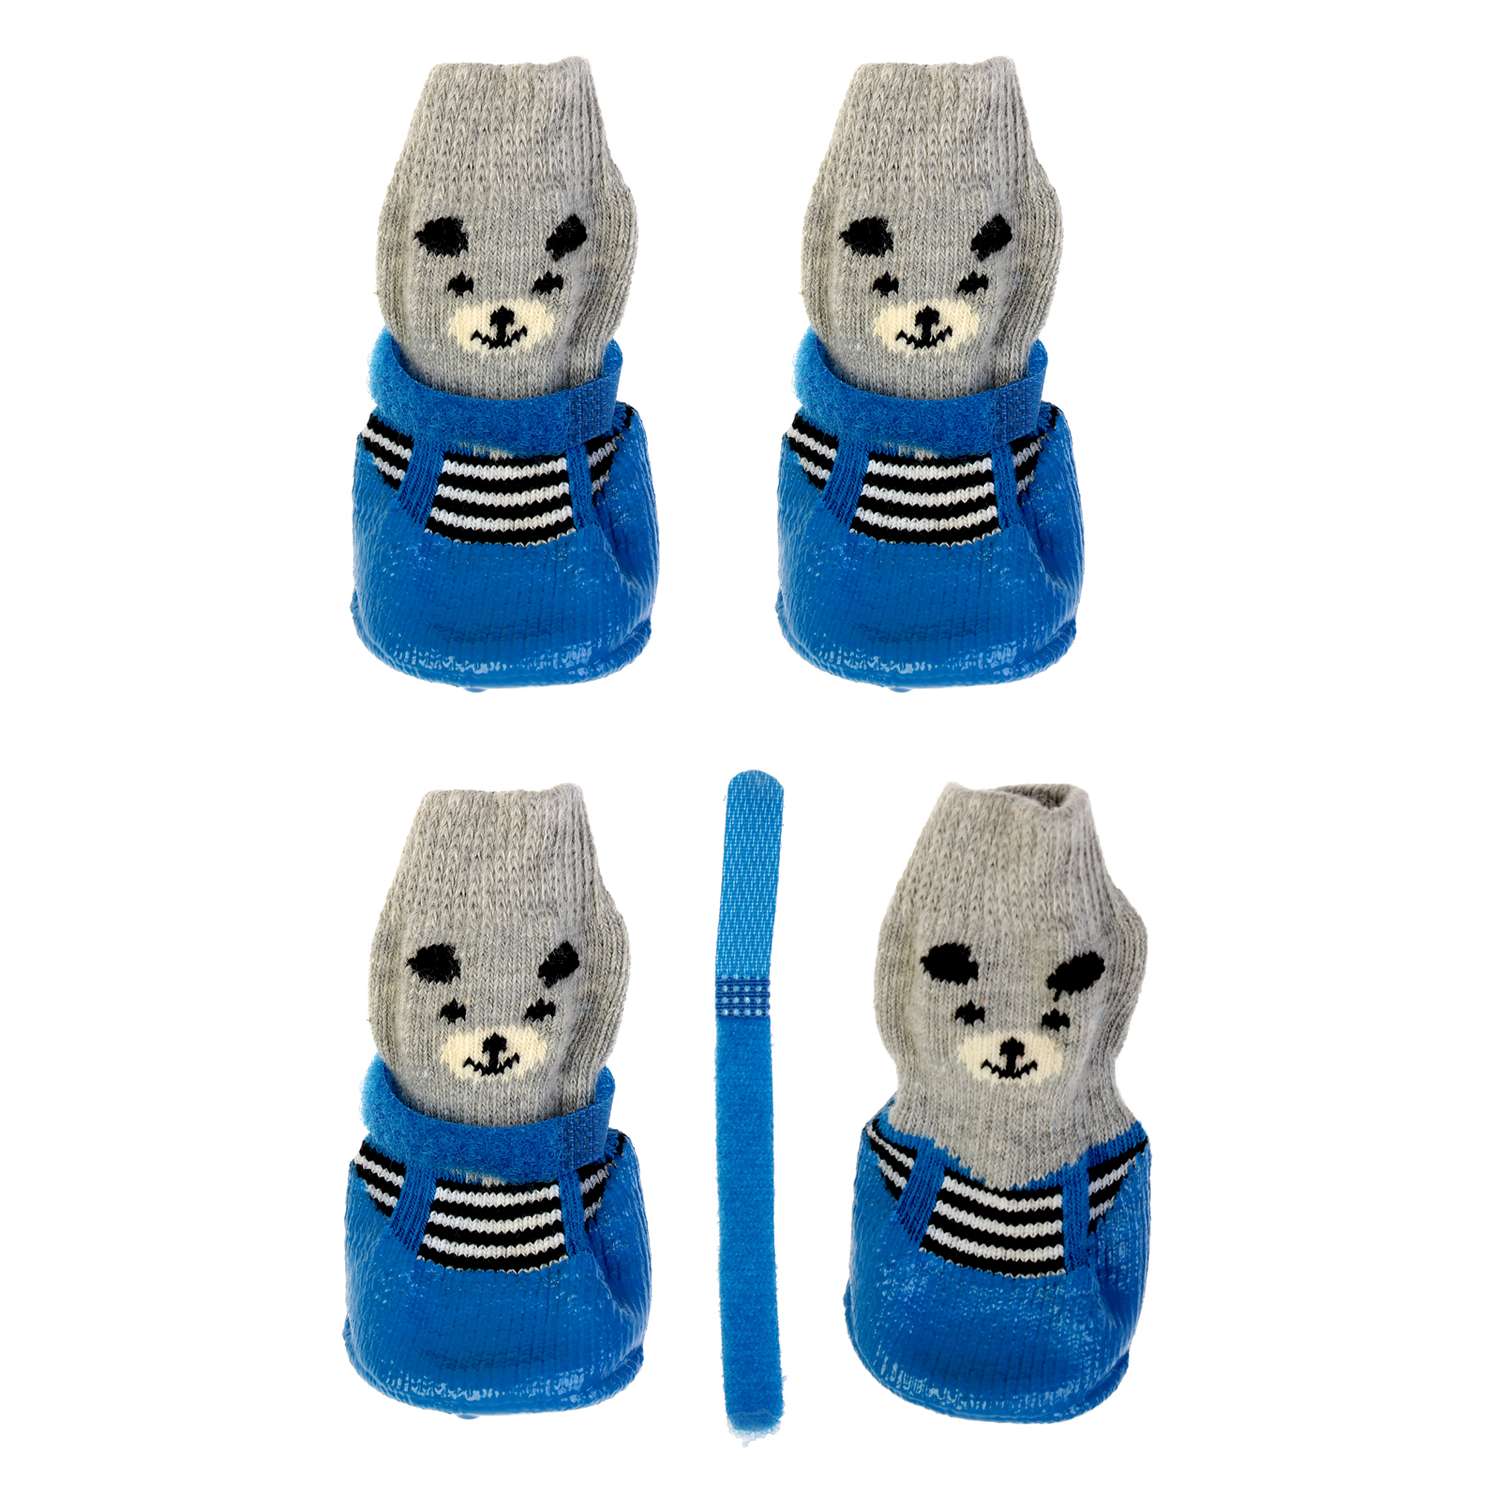 Носки Пижон «Мишки» с прорезиненной подошвой размер L 5 х 6.5 см синие - фото 1